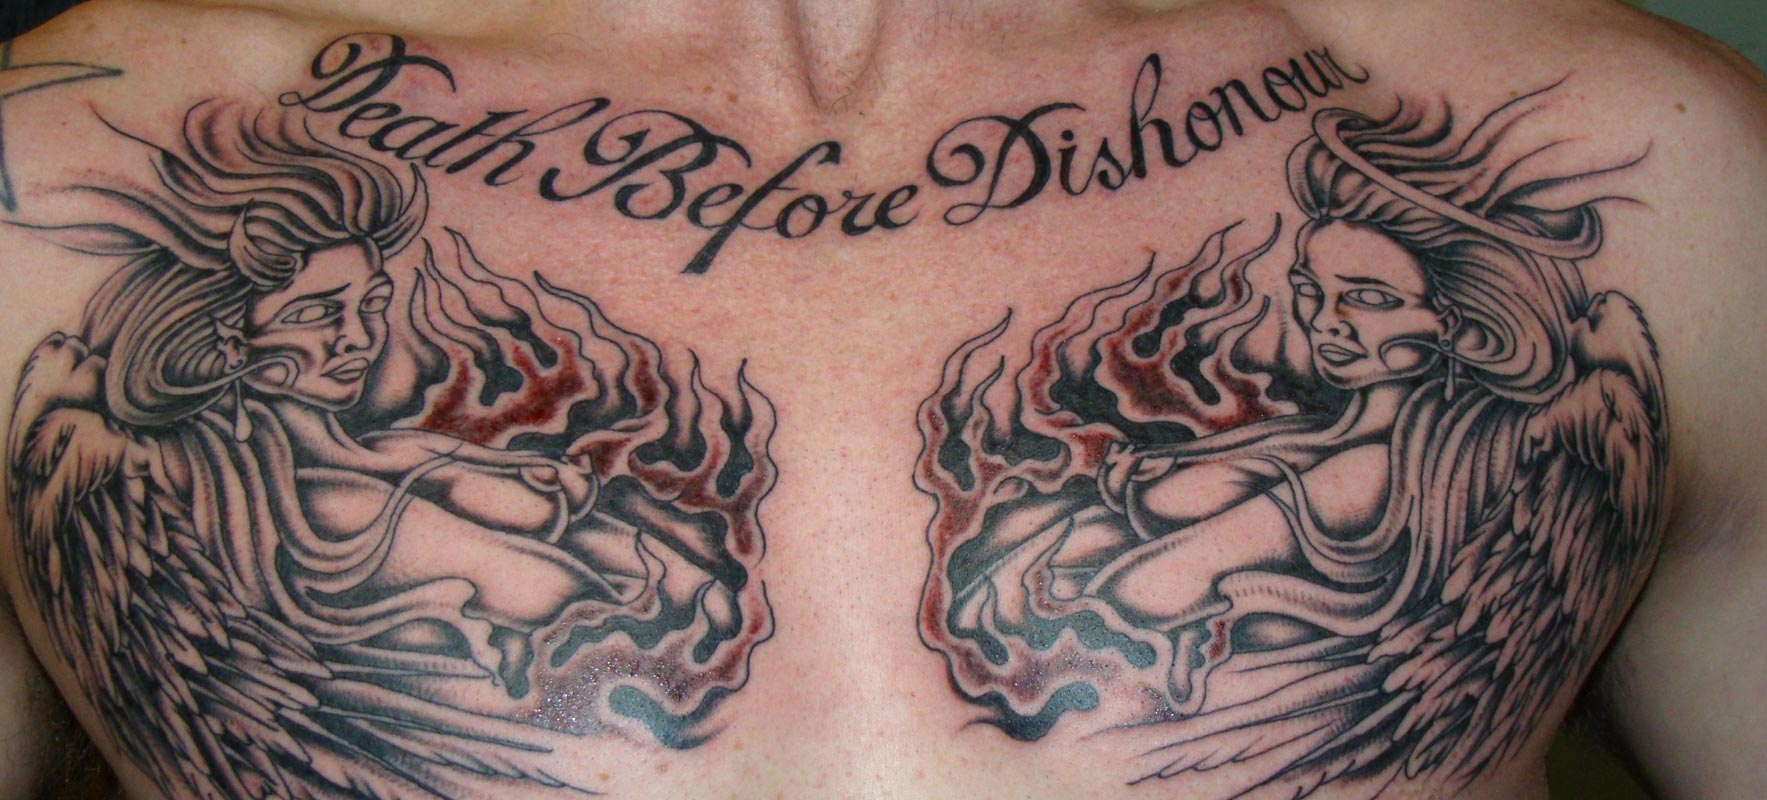 Outstanding Full Body Tattoo